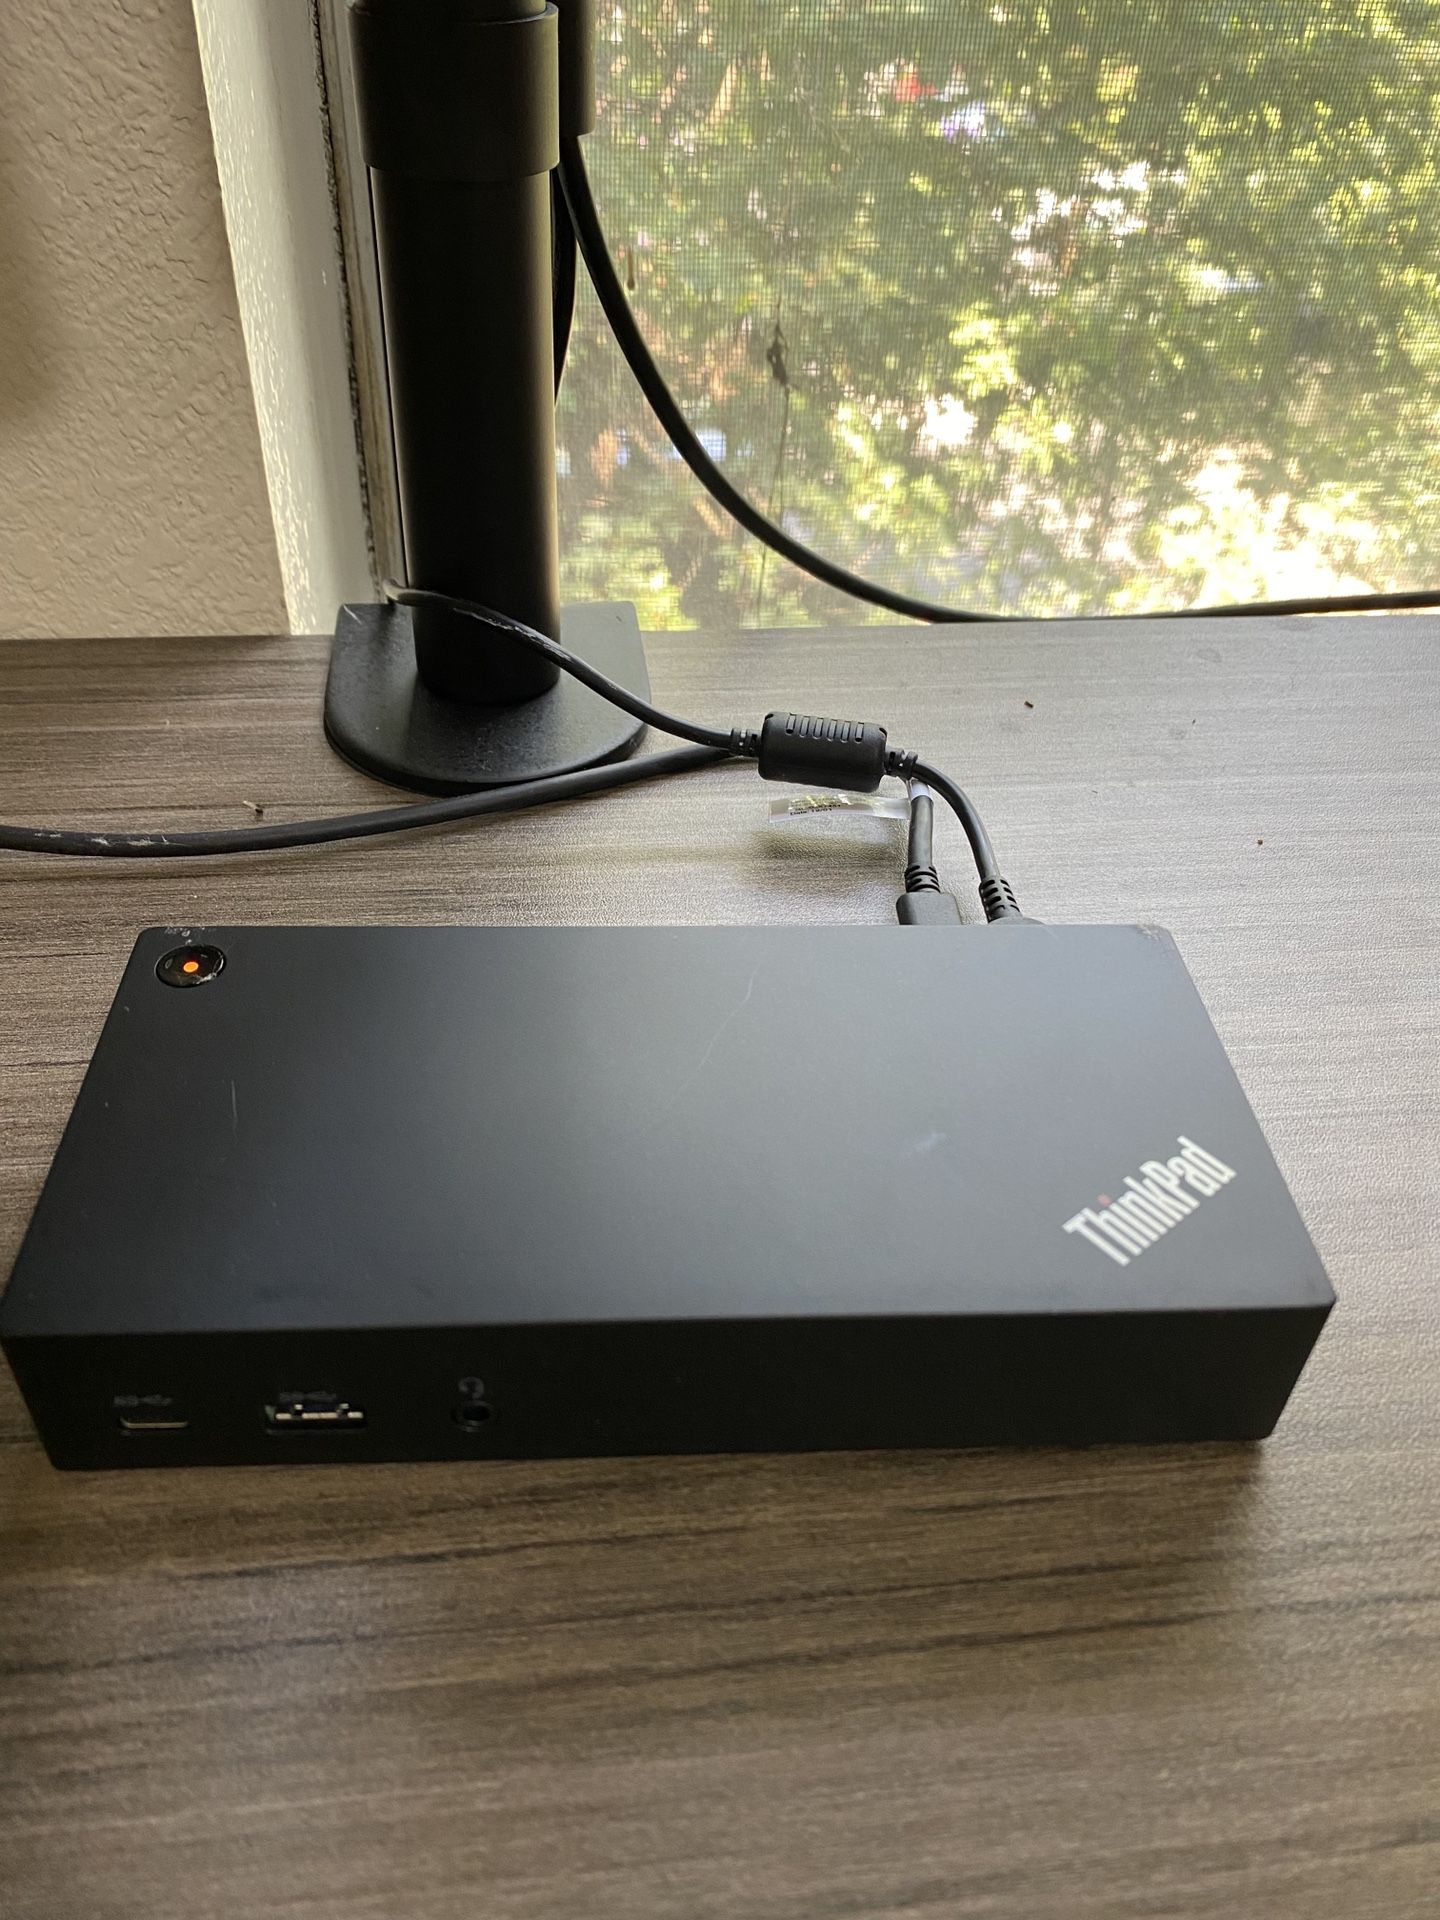 ThinkPad USB station